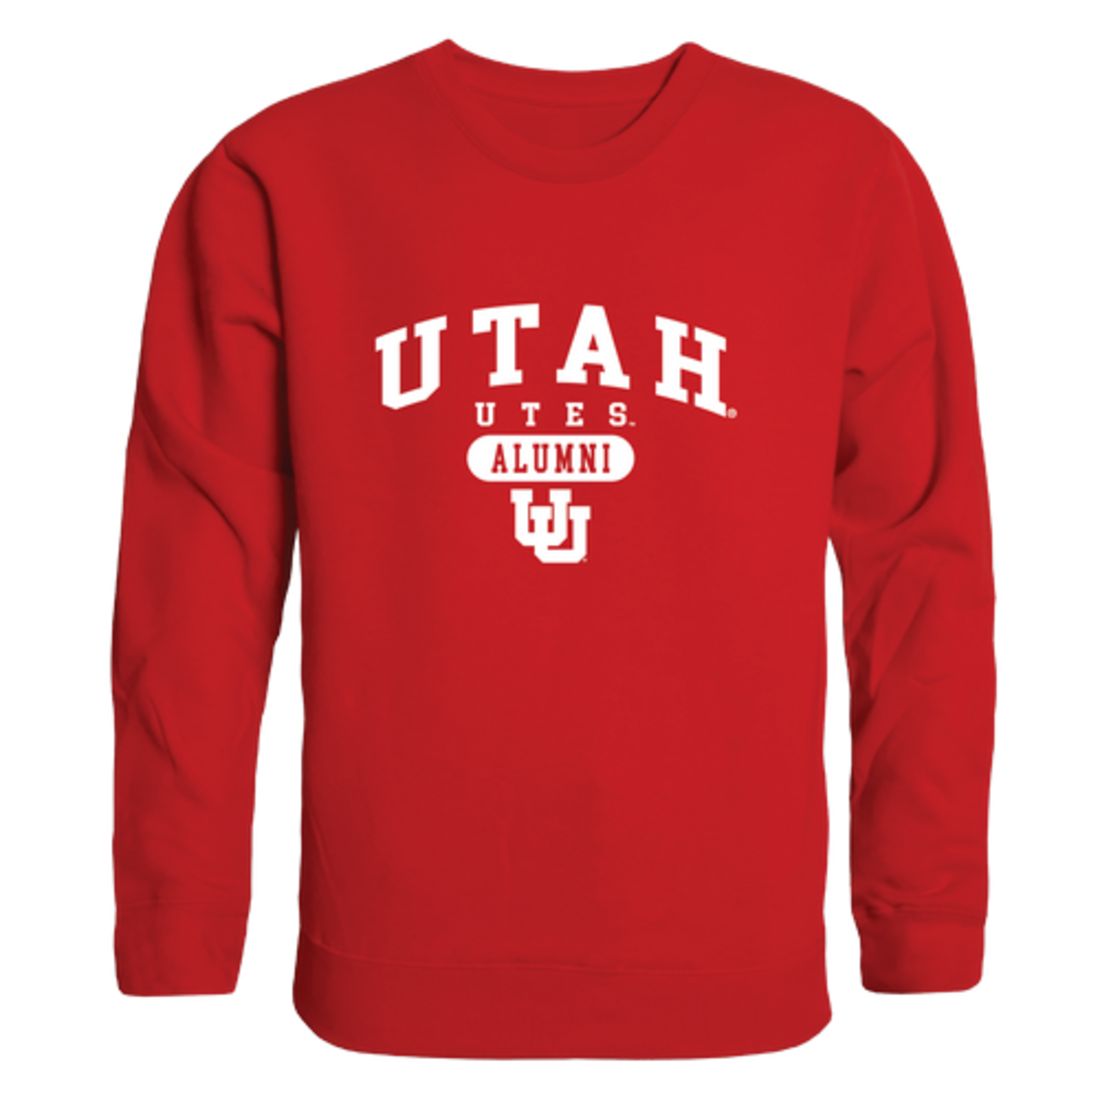 University of Utah Utes Alumni Fleece Crewneck Pullover Sweatshirt Heather Gray-Campus-Wardrobe